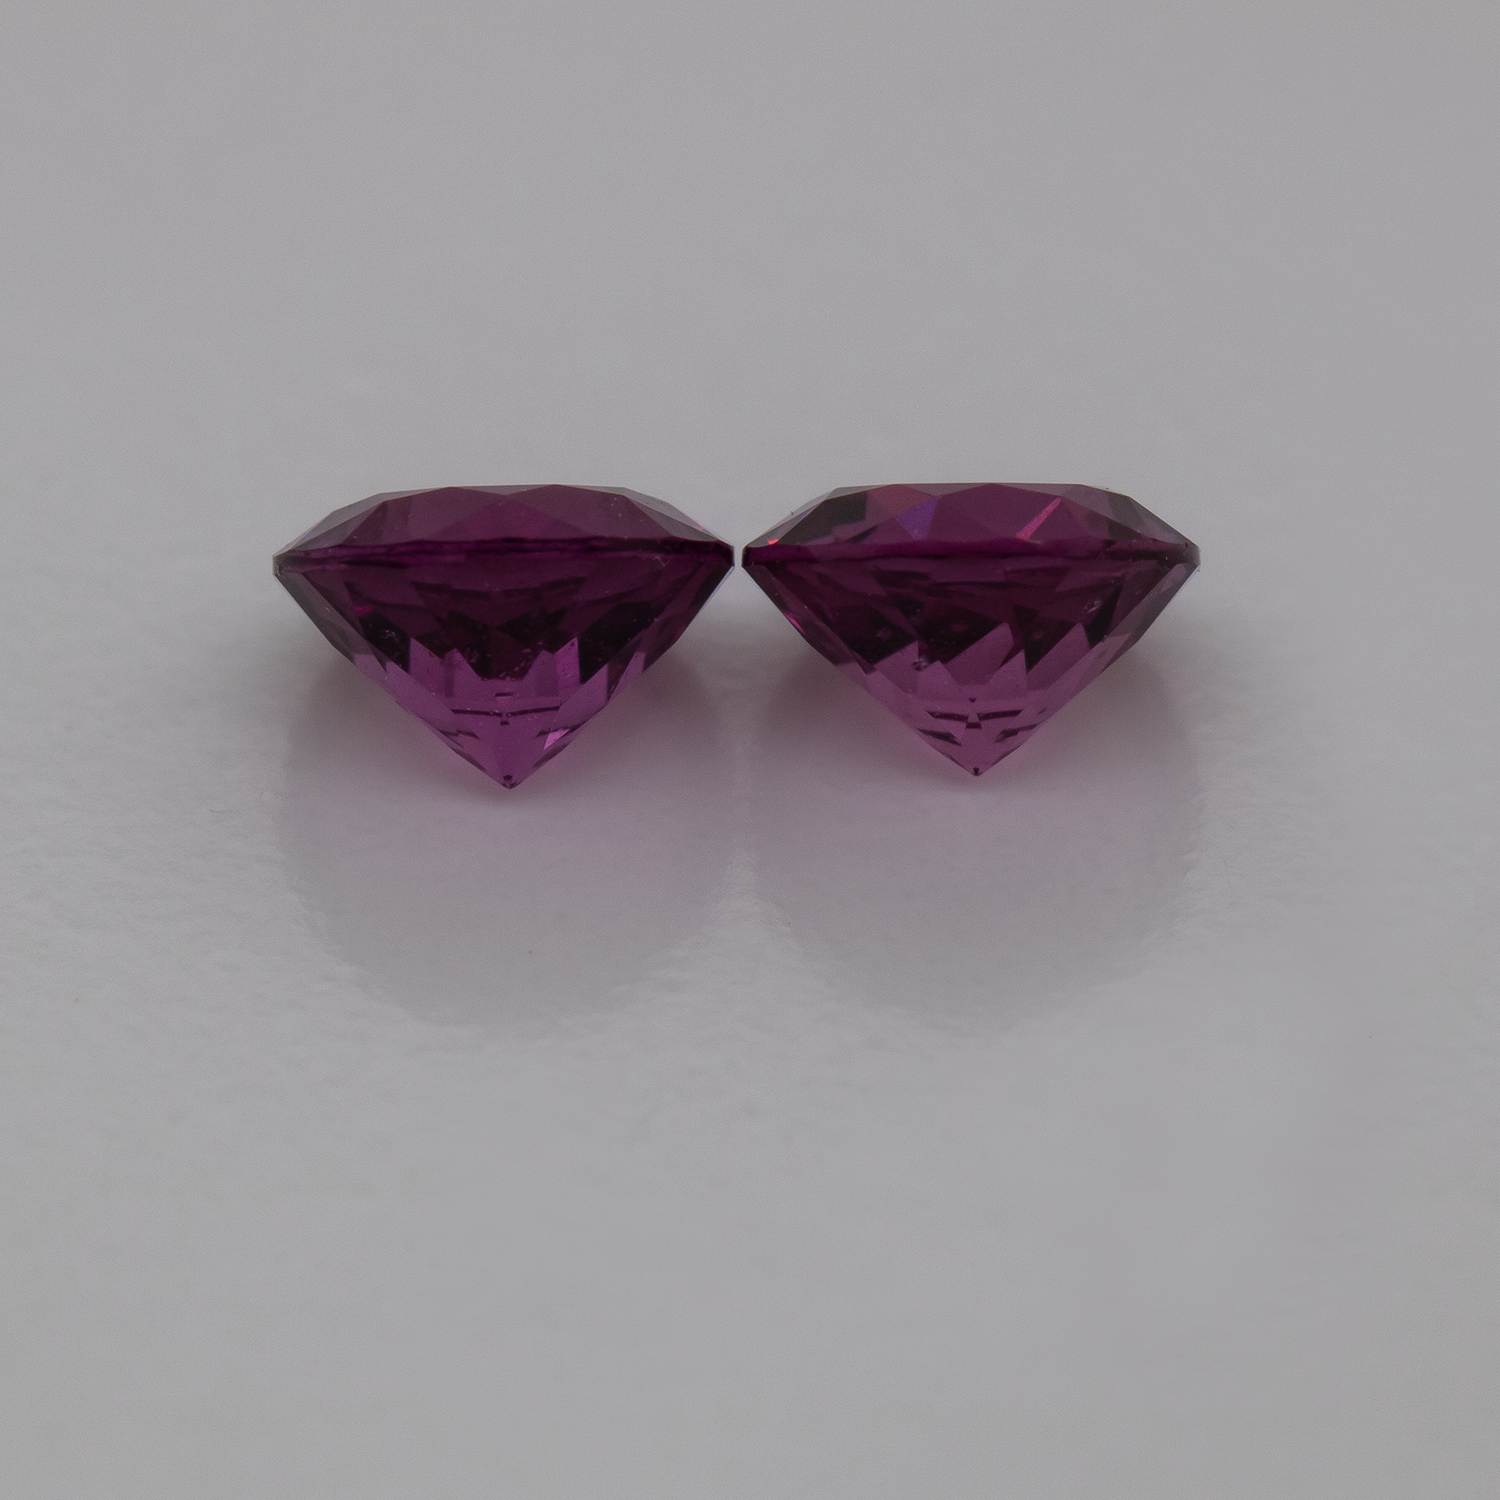 Royal Purple Garnet Paar - lila, rund, 4.5x4.5 mm, 0.92 cts, Nr. RP94002